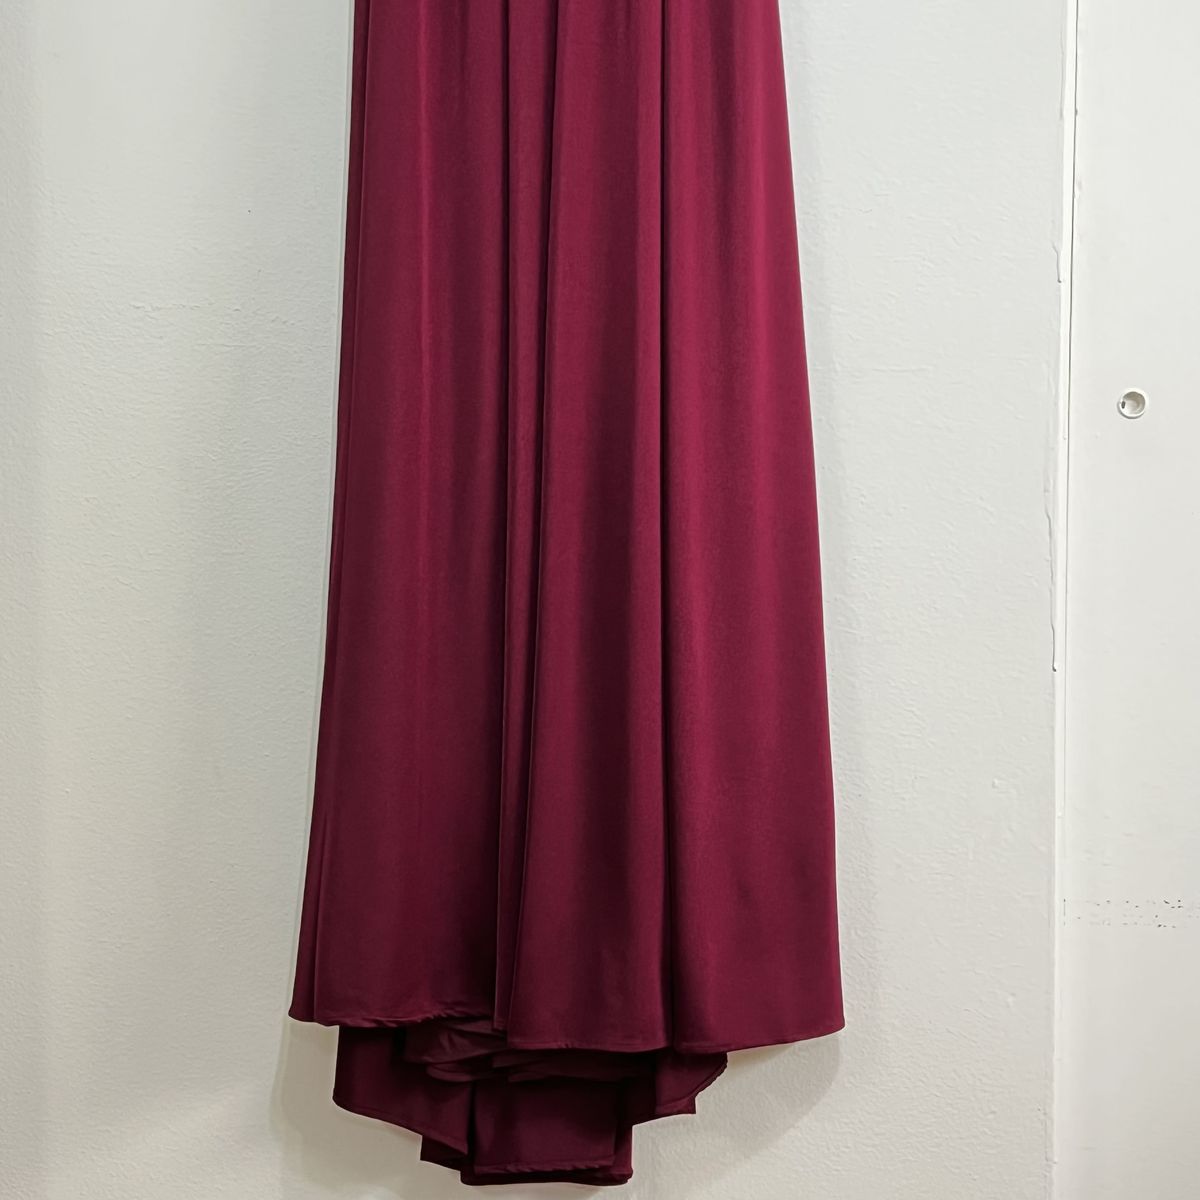 Style 28547 La Femme Size 6 Plunge Red Side Slit Dress on Queenly